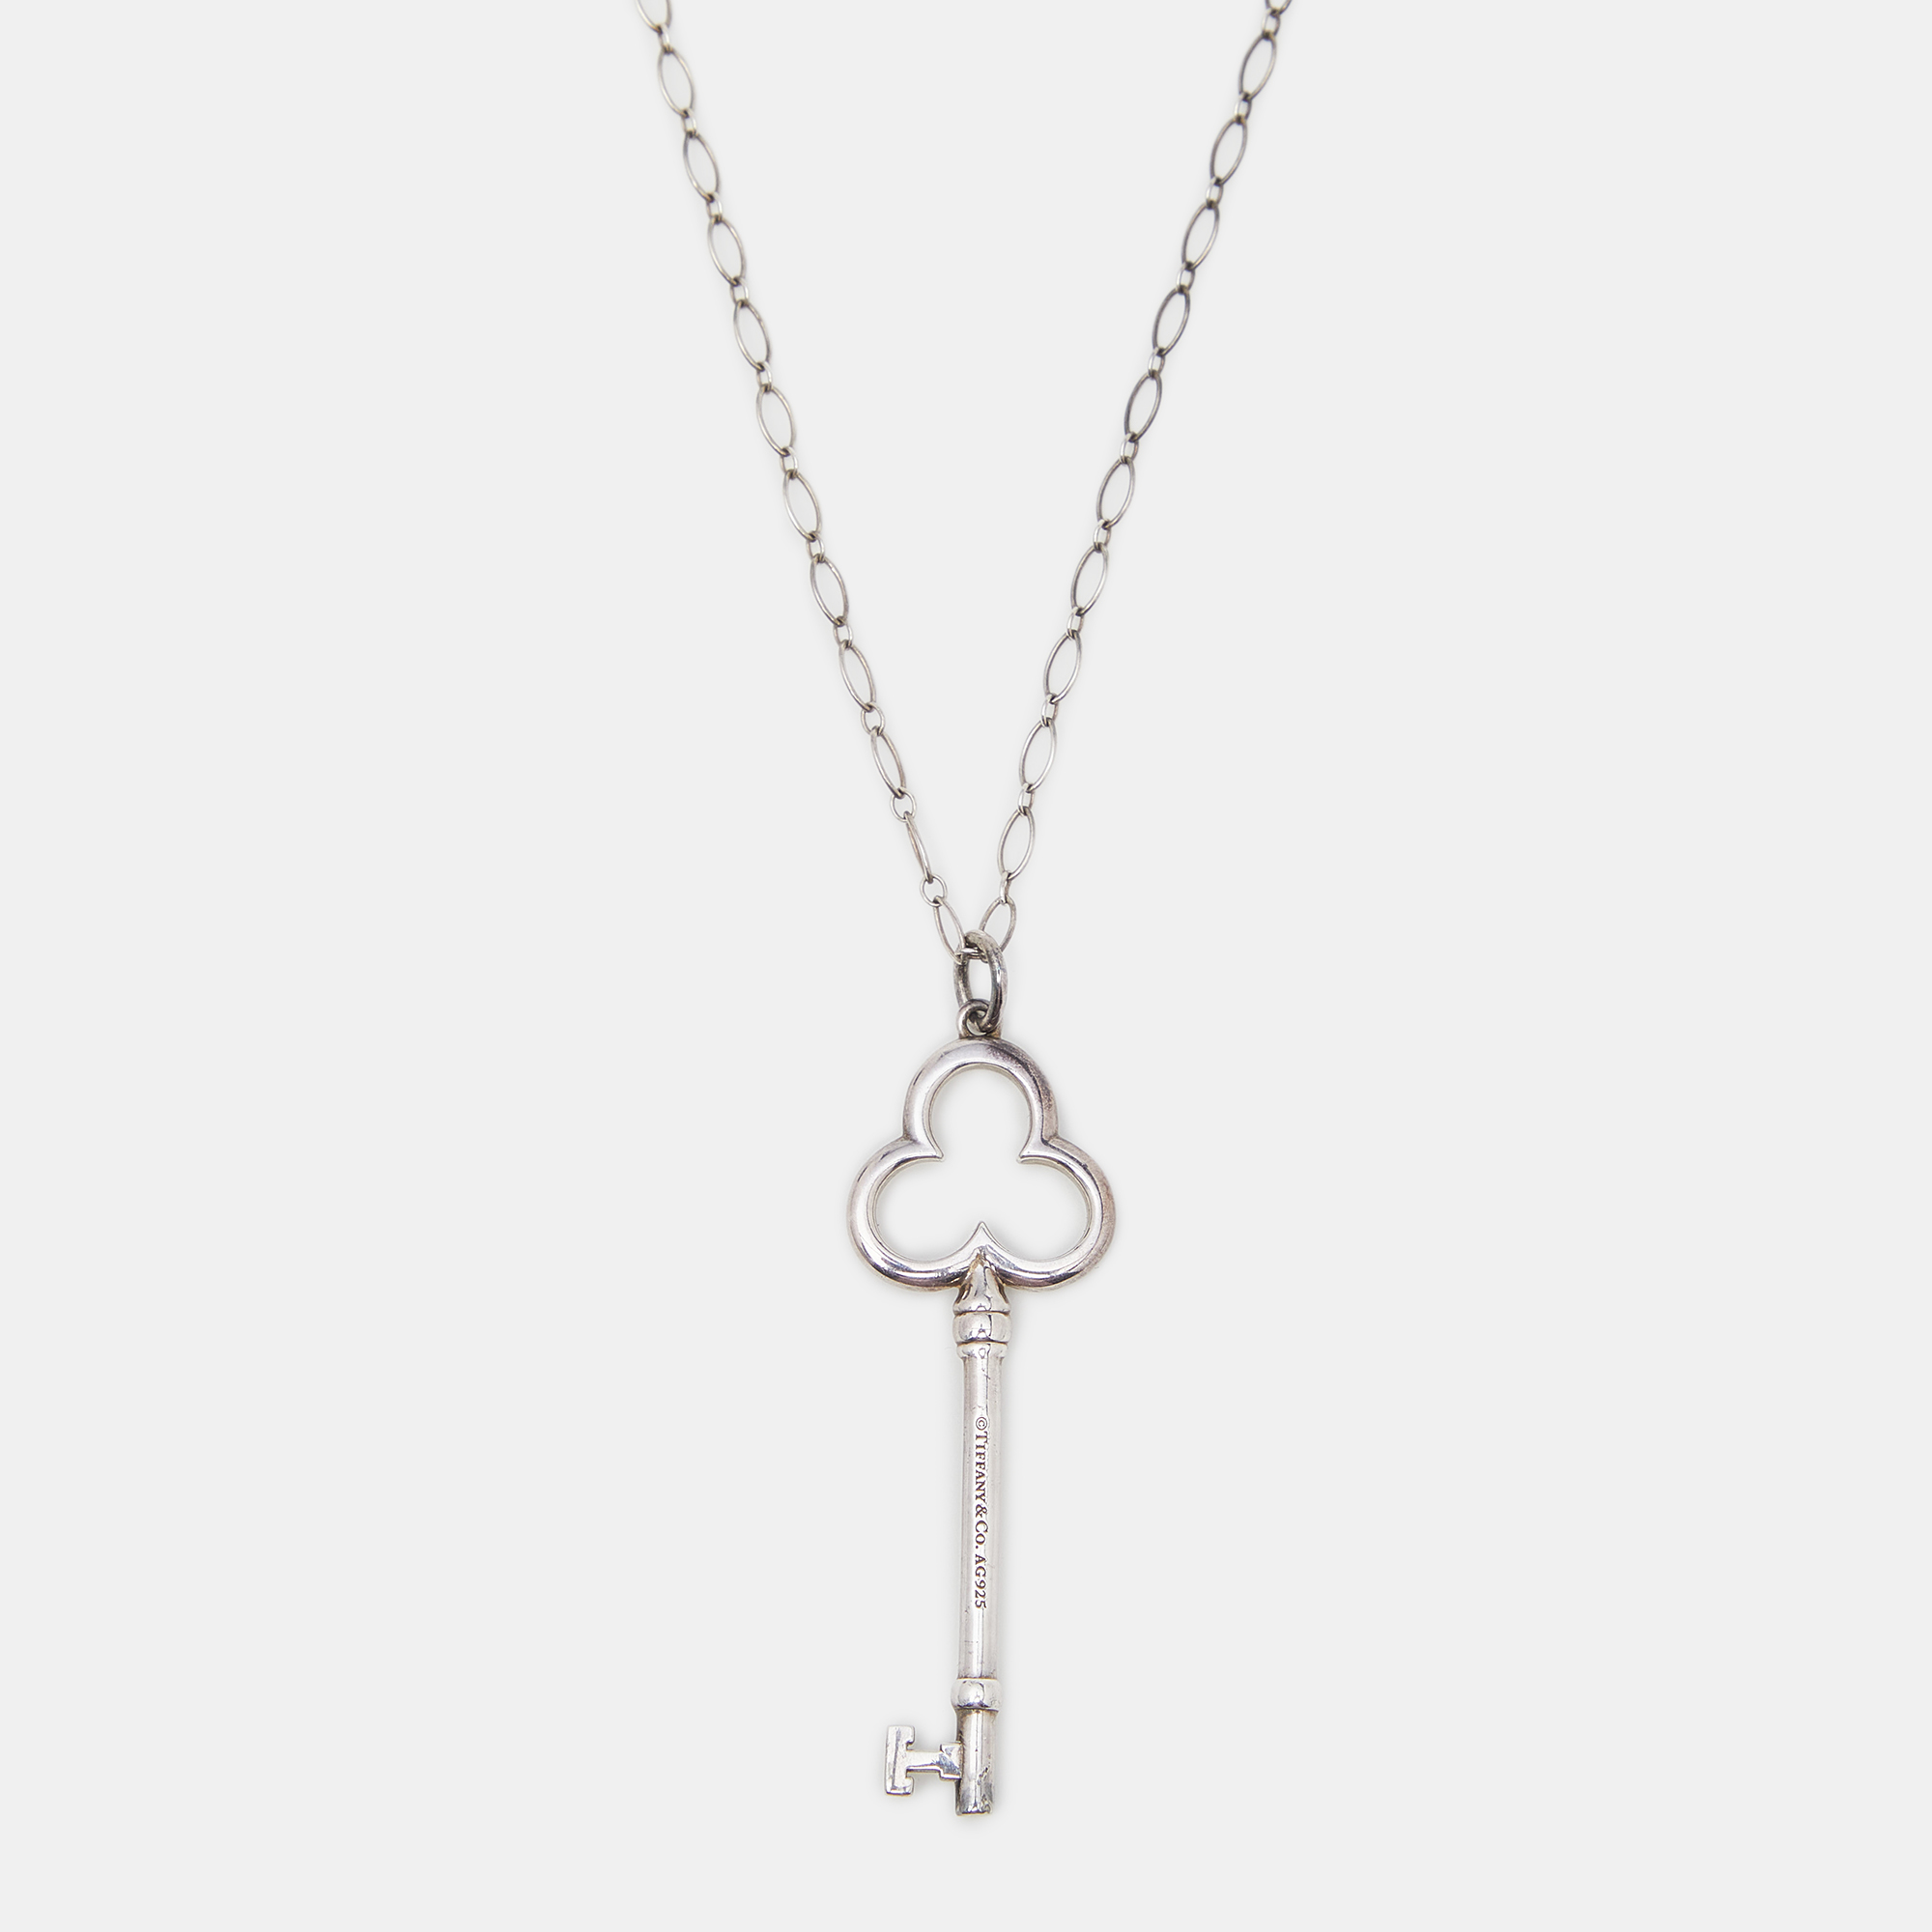 

Tiffany & Co. Trefoil Key Sterling Silver Pendant Oval Link Chain Necklace